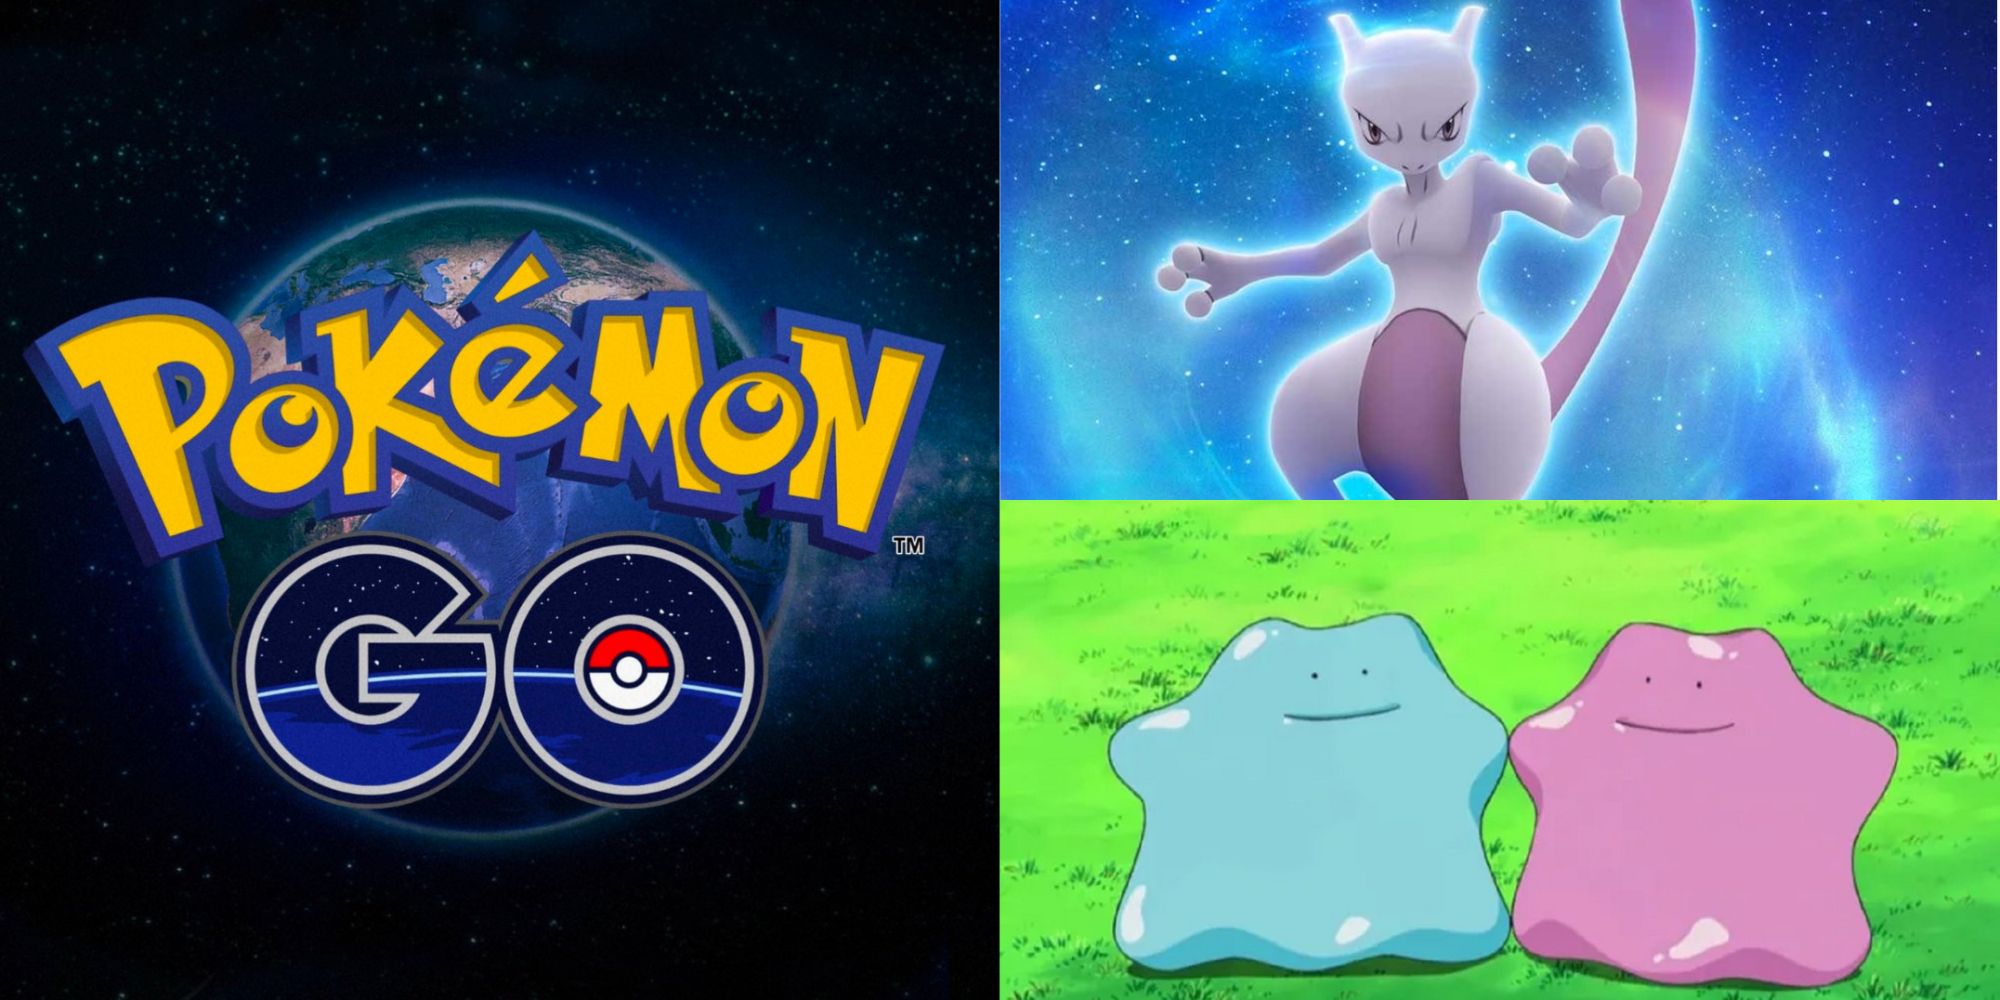 Pokémon Go Ditto is no longer the rarest Pokémon